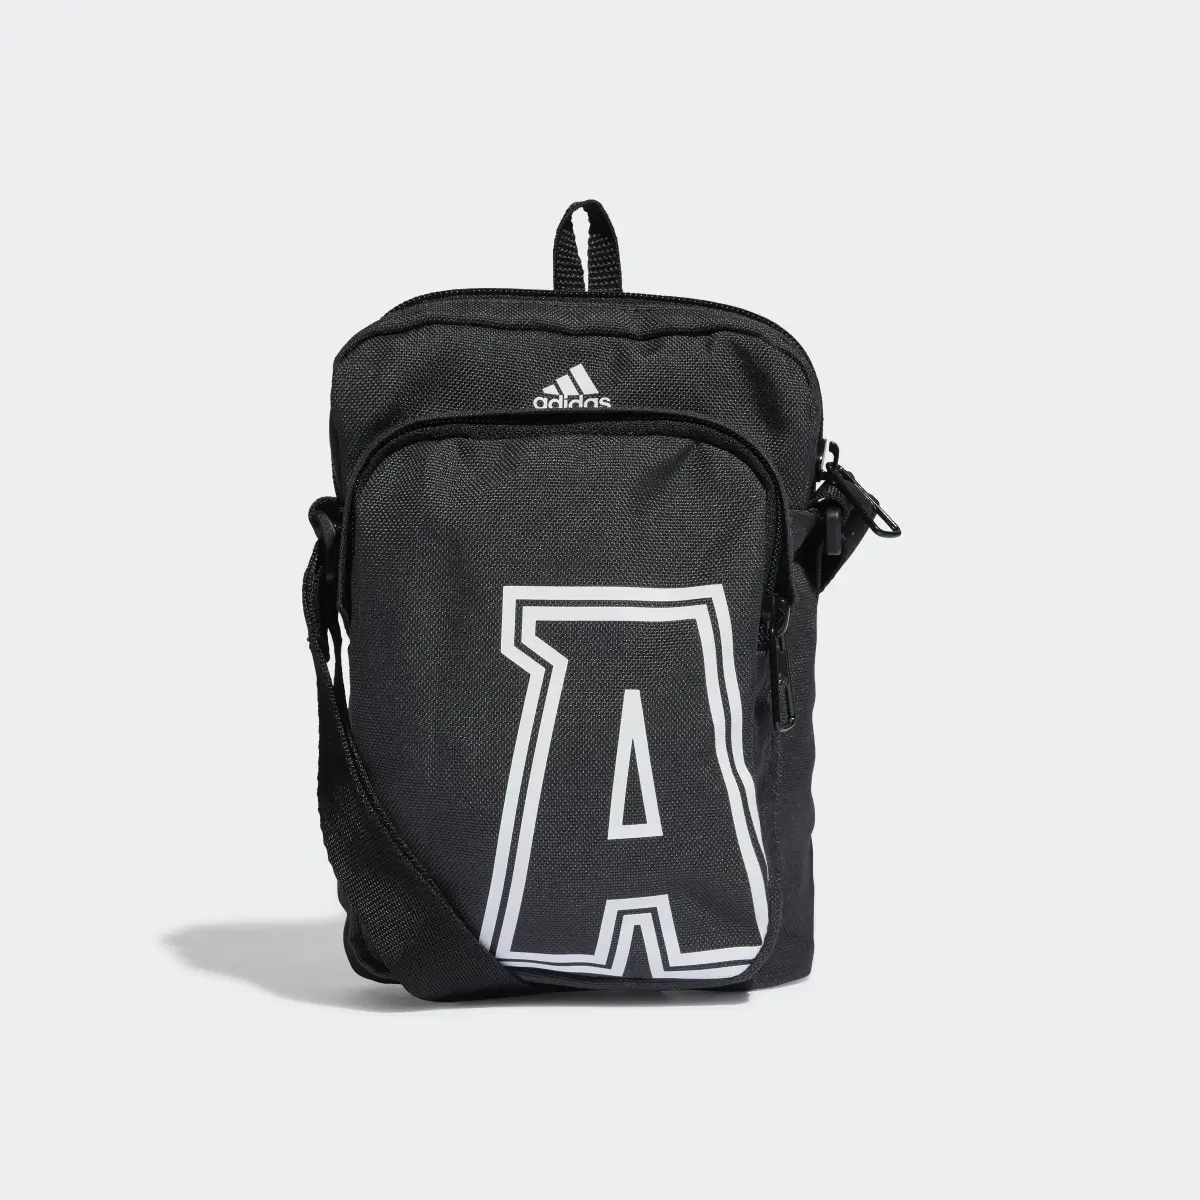 Adidas Classic Brand Love Initial Print Organizer Bag. 2